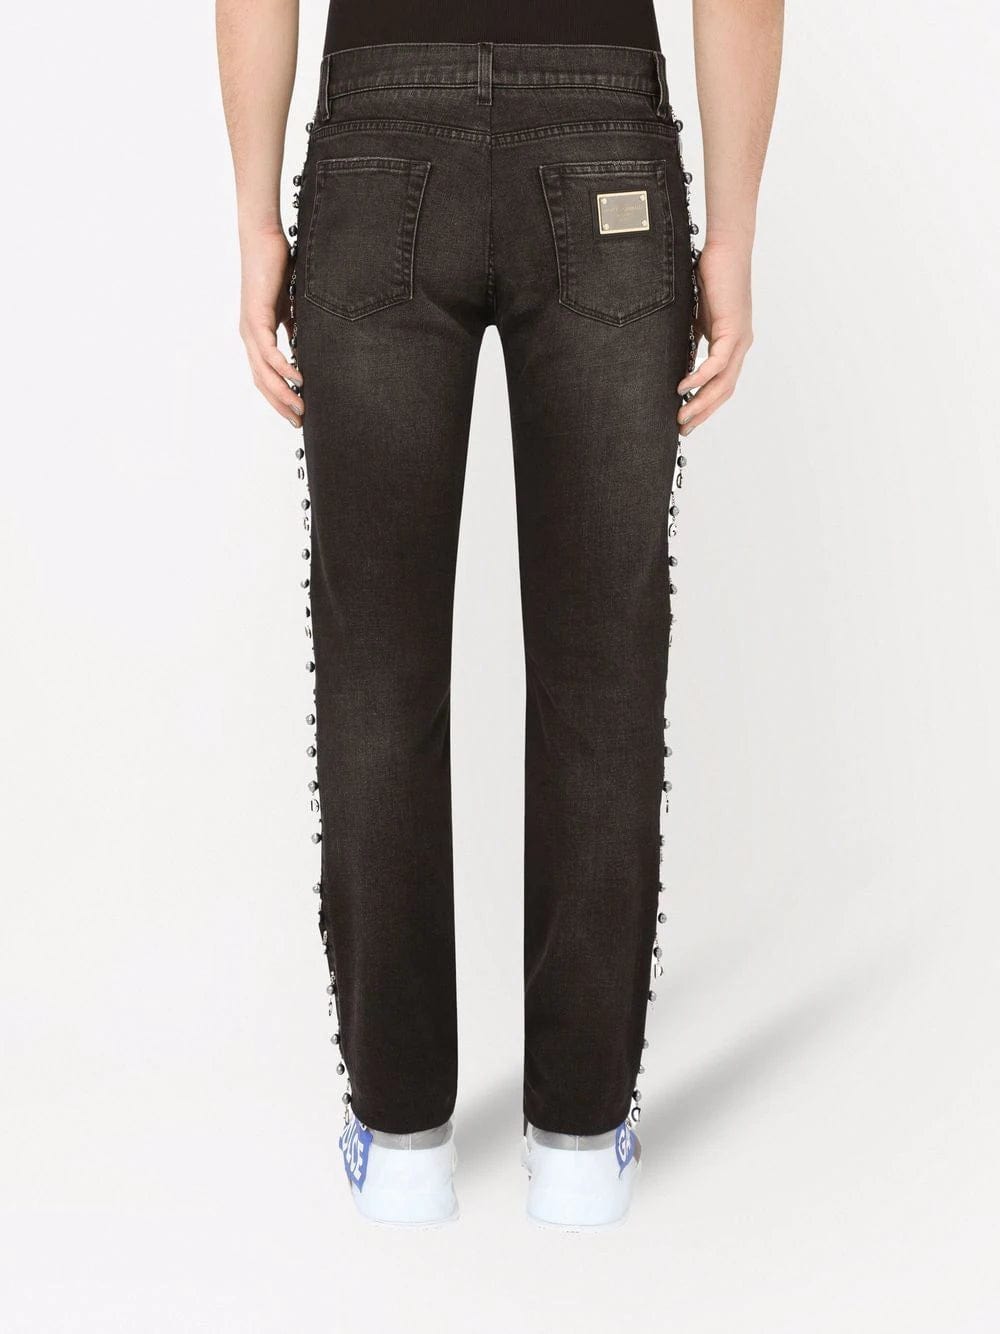 Dolce & Gabbana Charm-Embellished Skinny Jeans